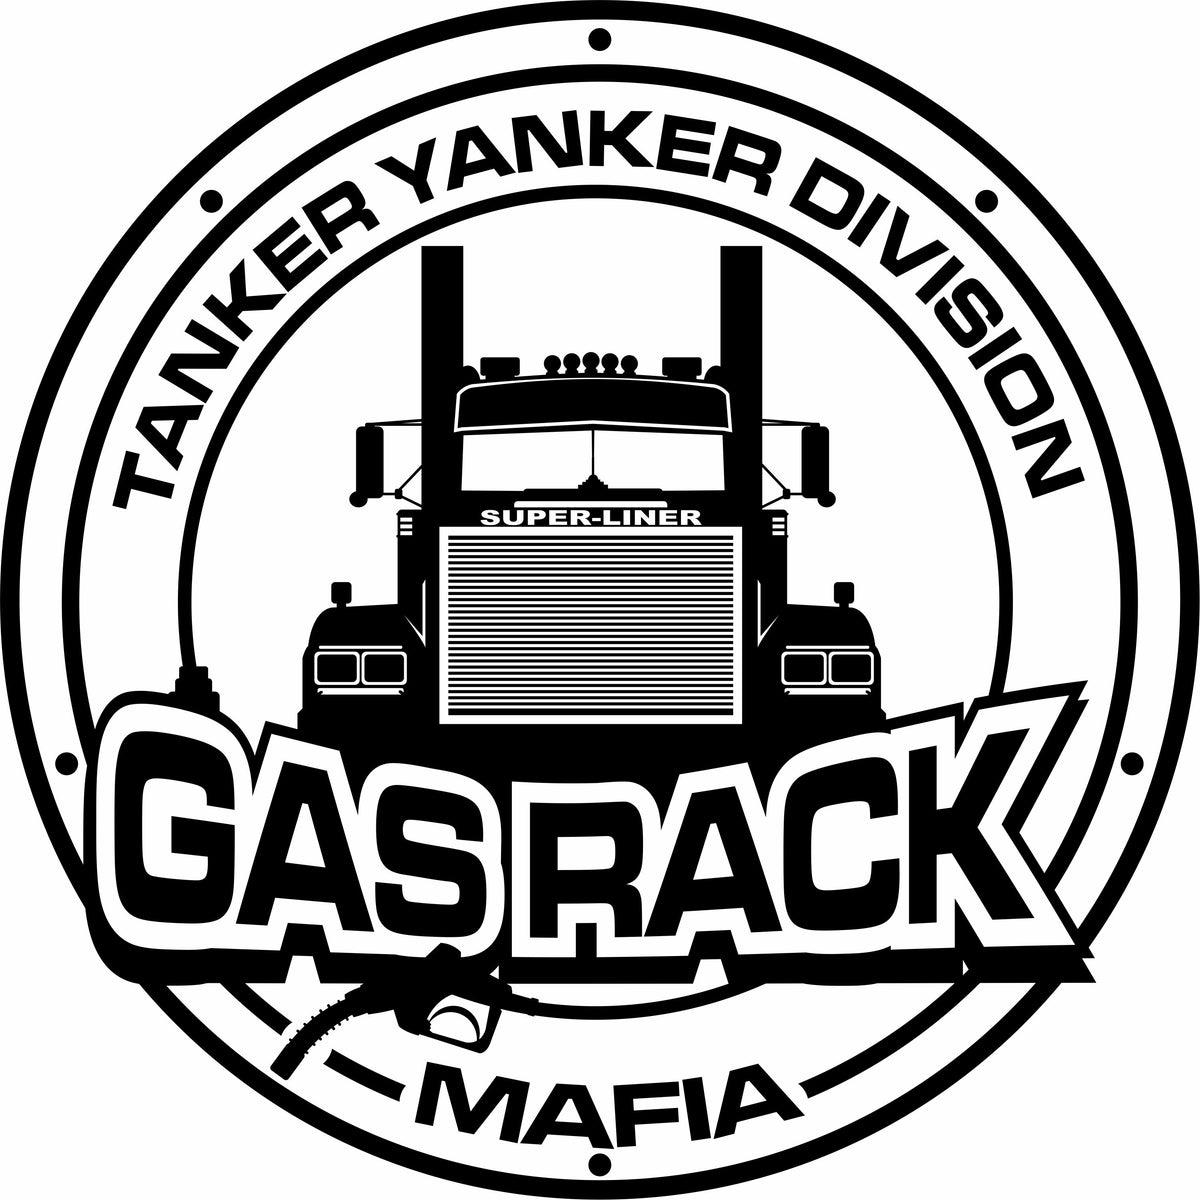 Gas Rack Mafia Super-Liner Vinyl Decal Free Shipping